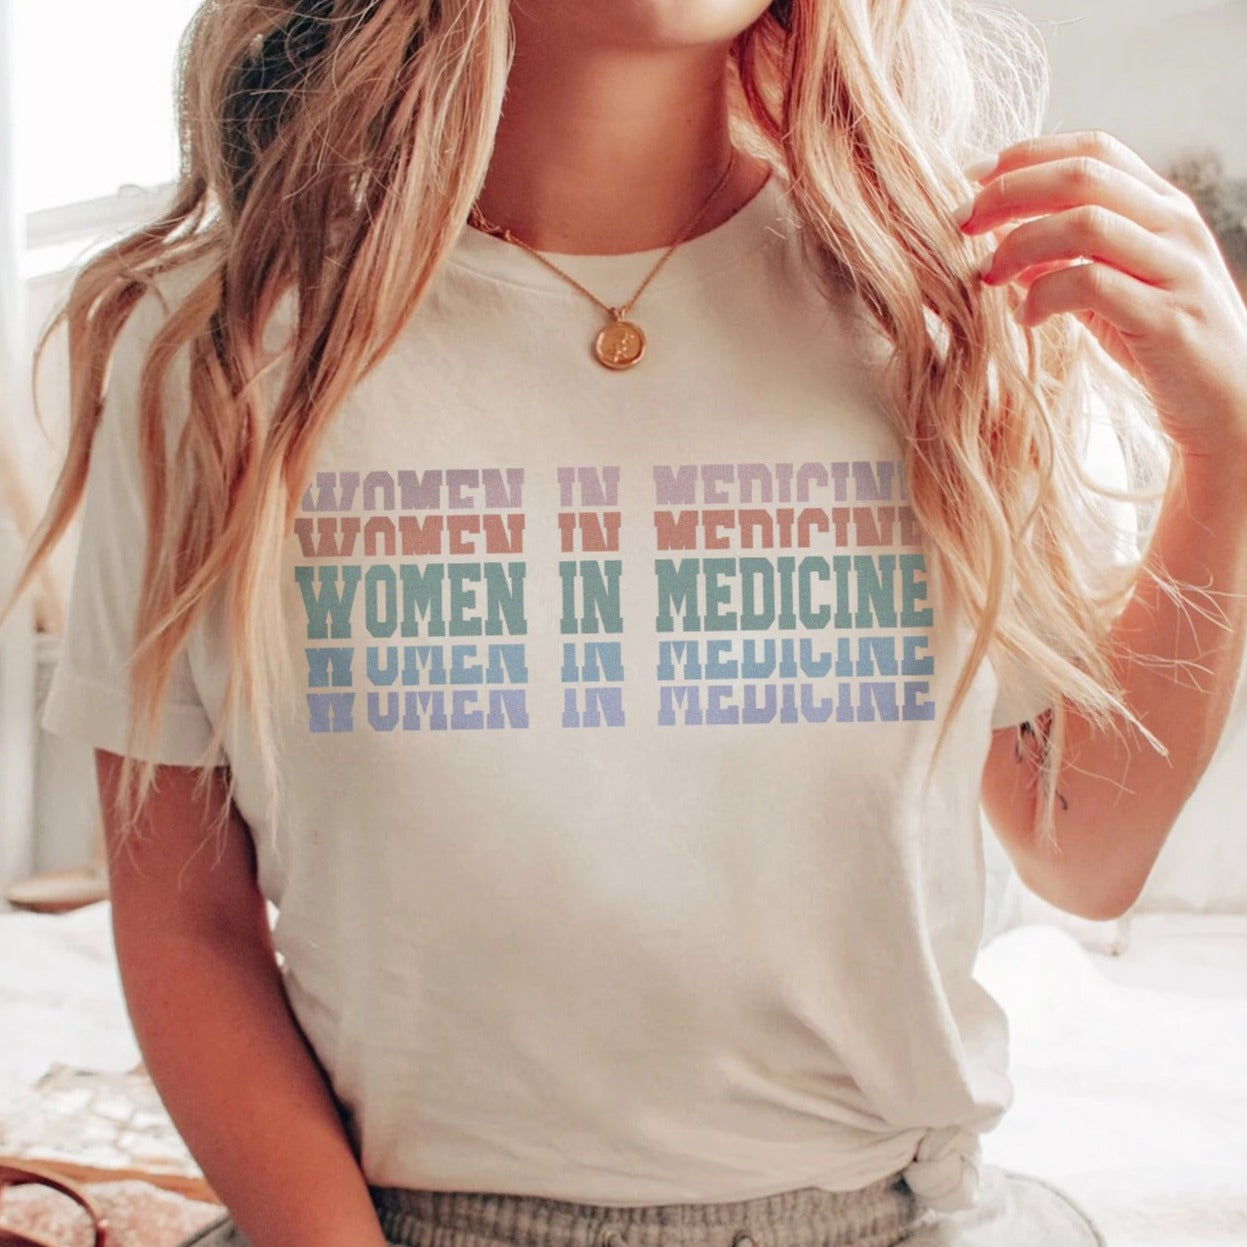 Women in Medicine T-Shirt